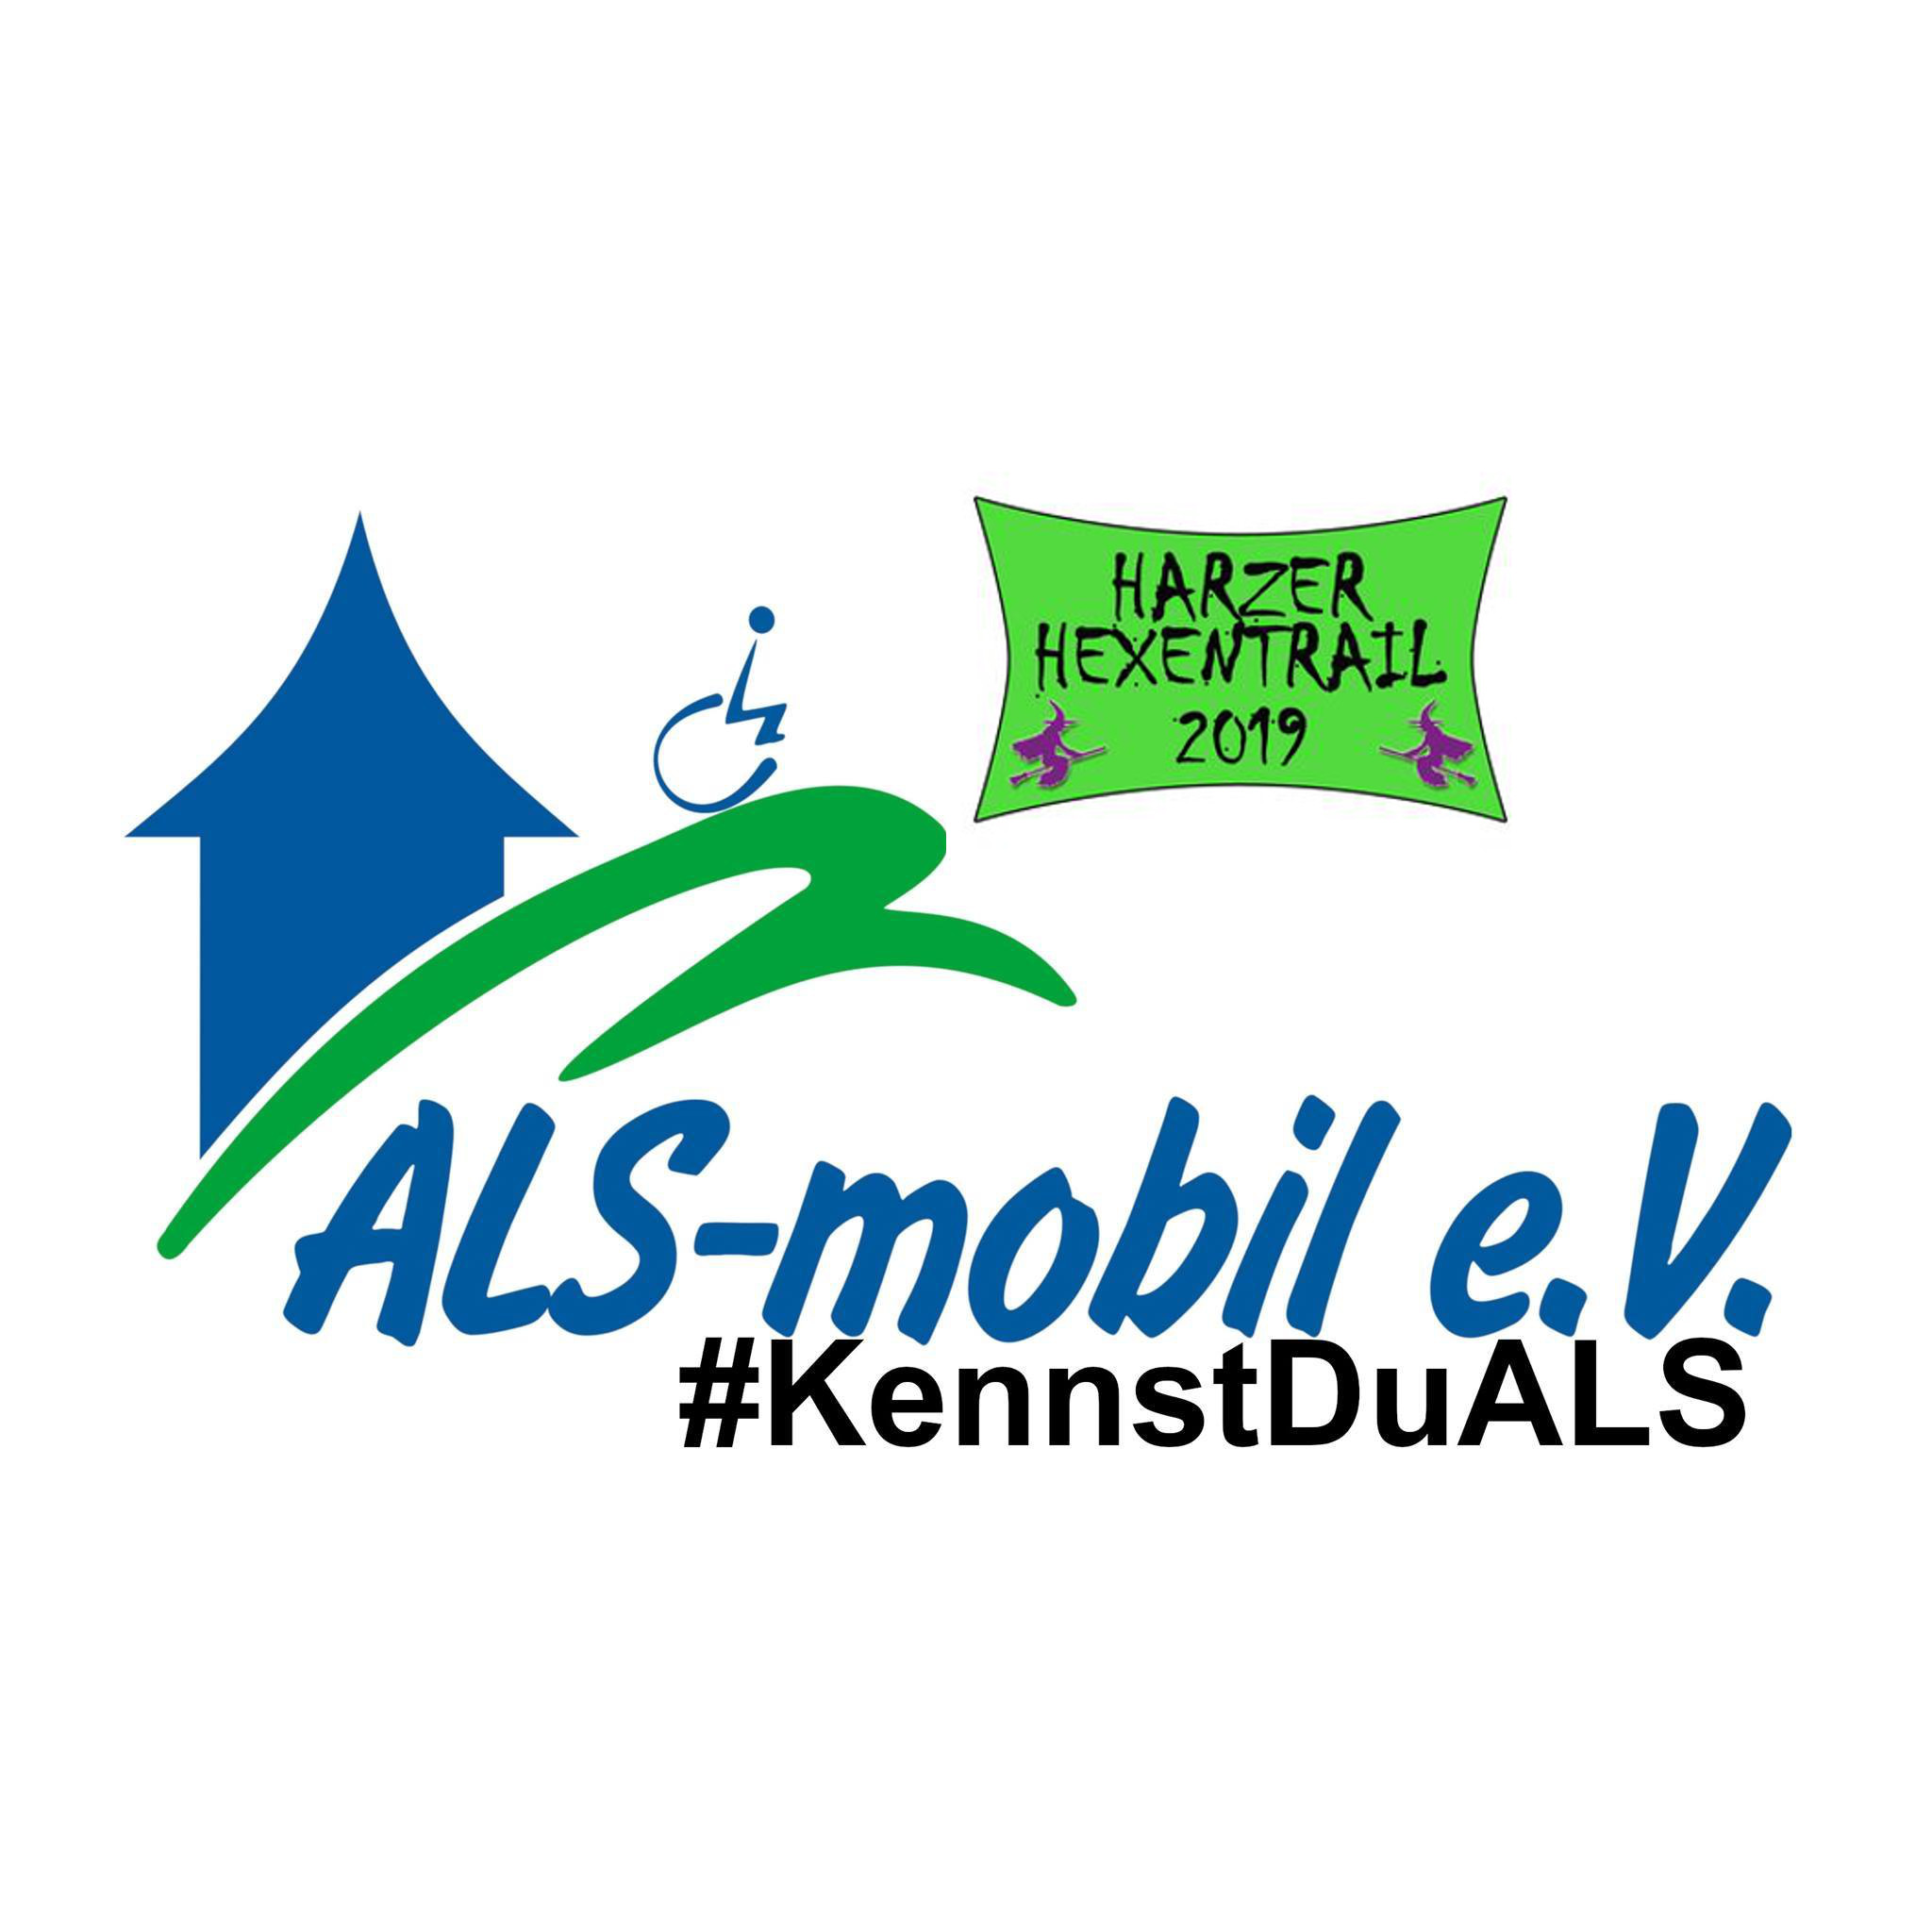 ALS mobil eV Hexentrail 2019